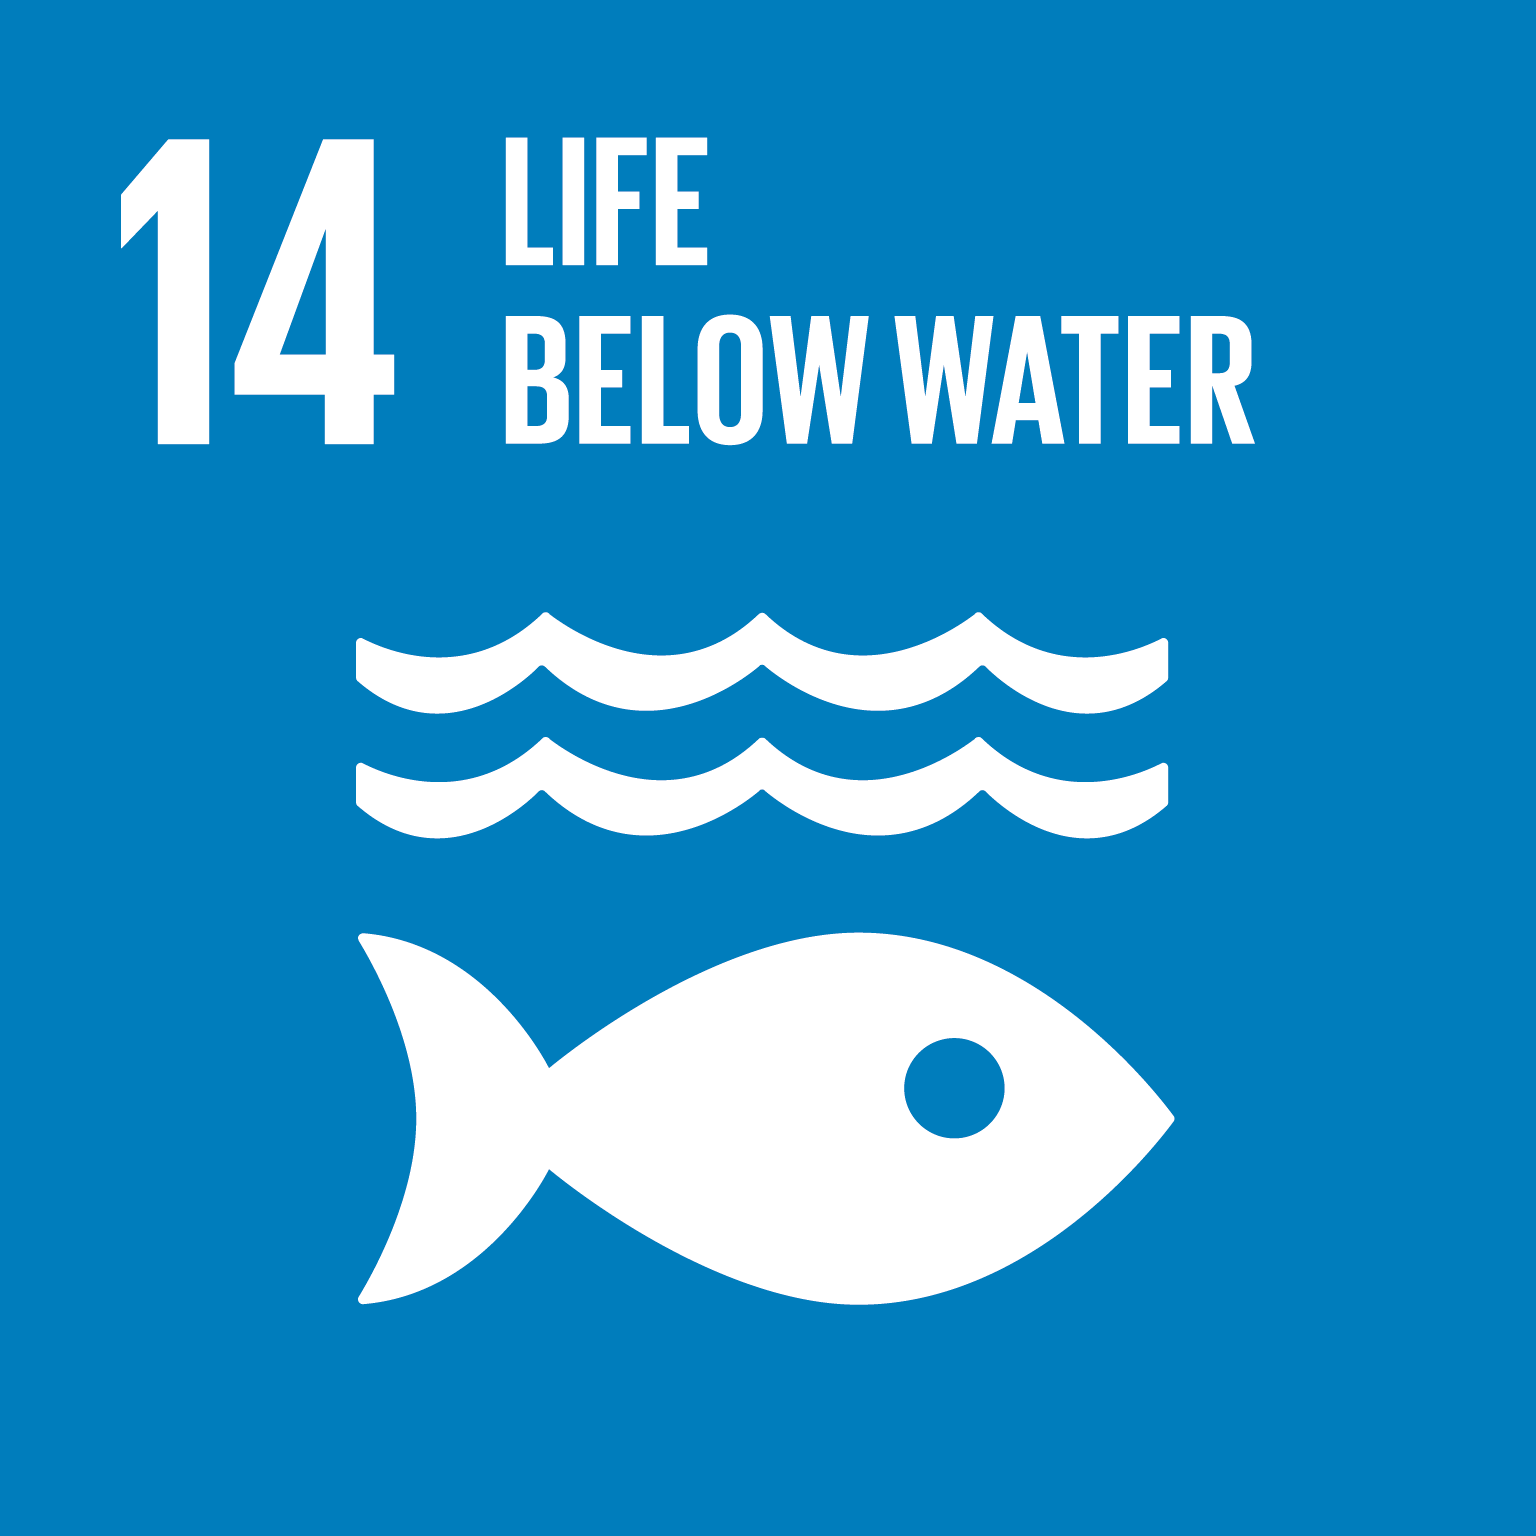 sustainable development goal 14 icon life below water